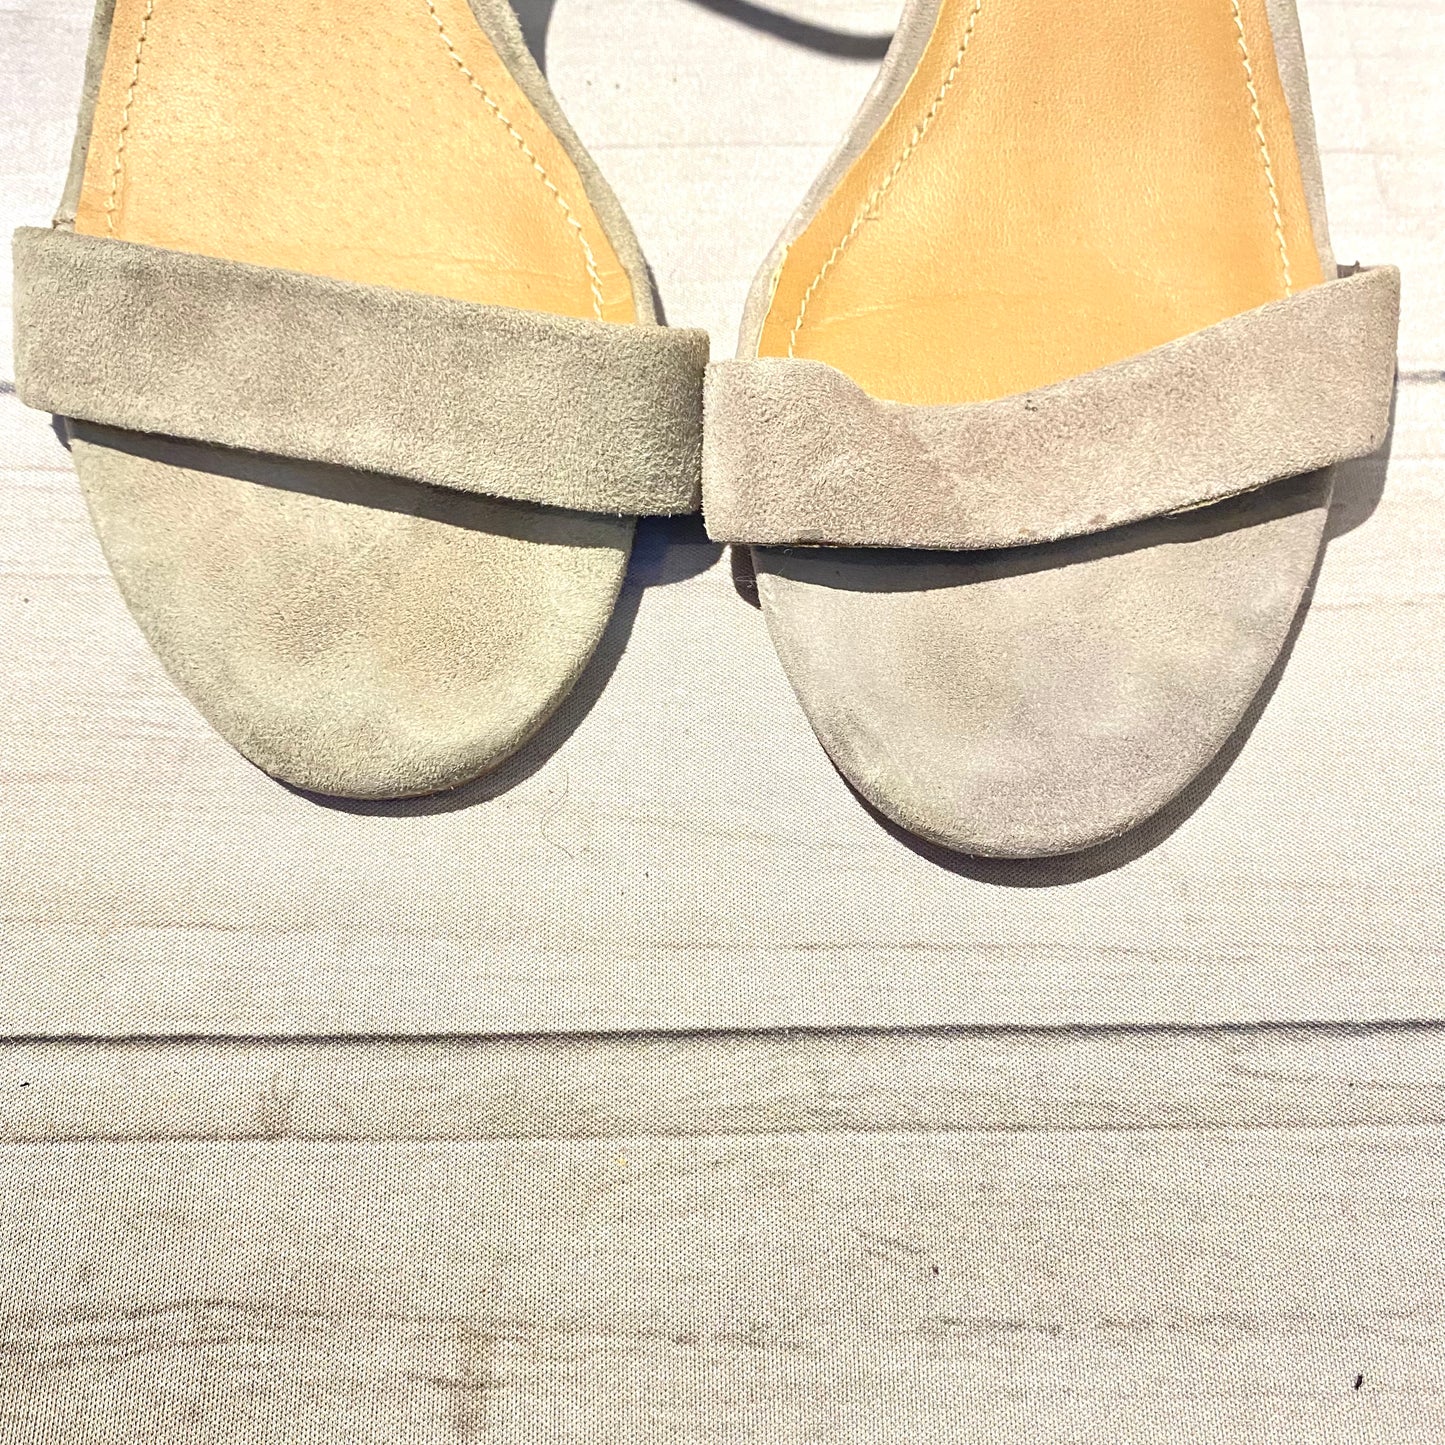 Sandals Heels Block By Steve Madden  Size: 8.5